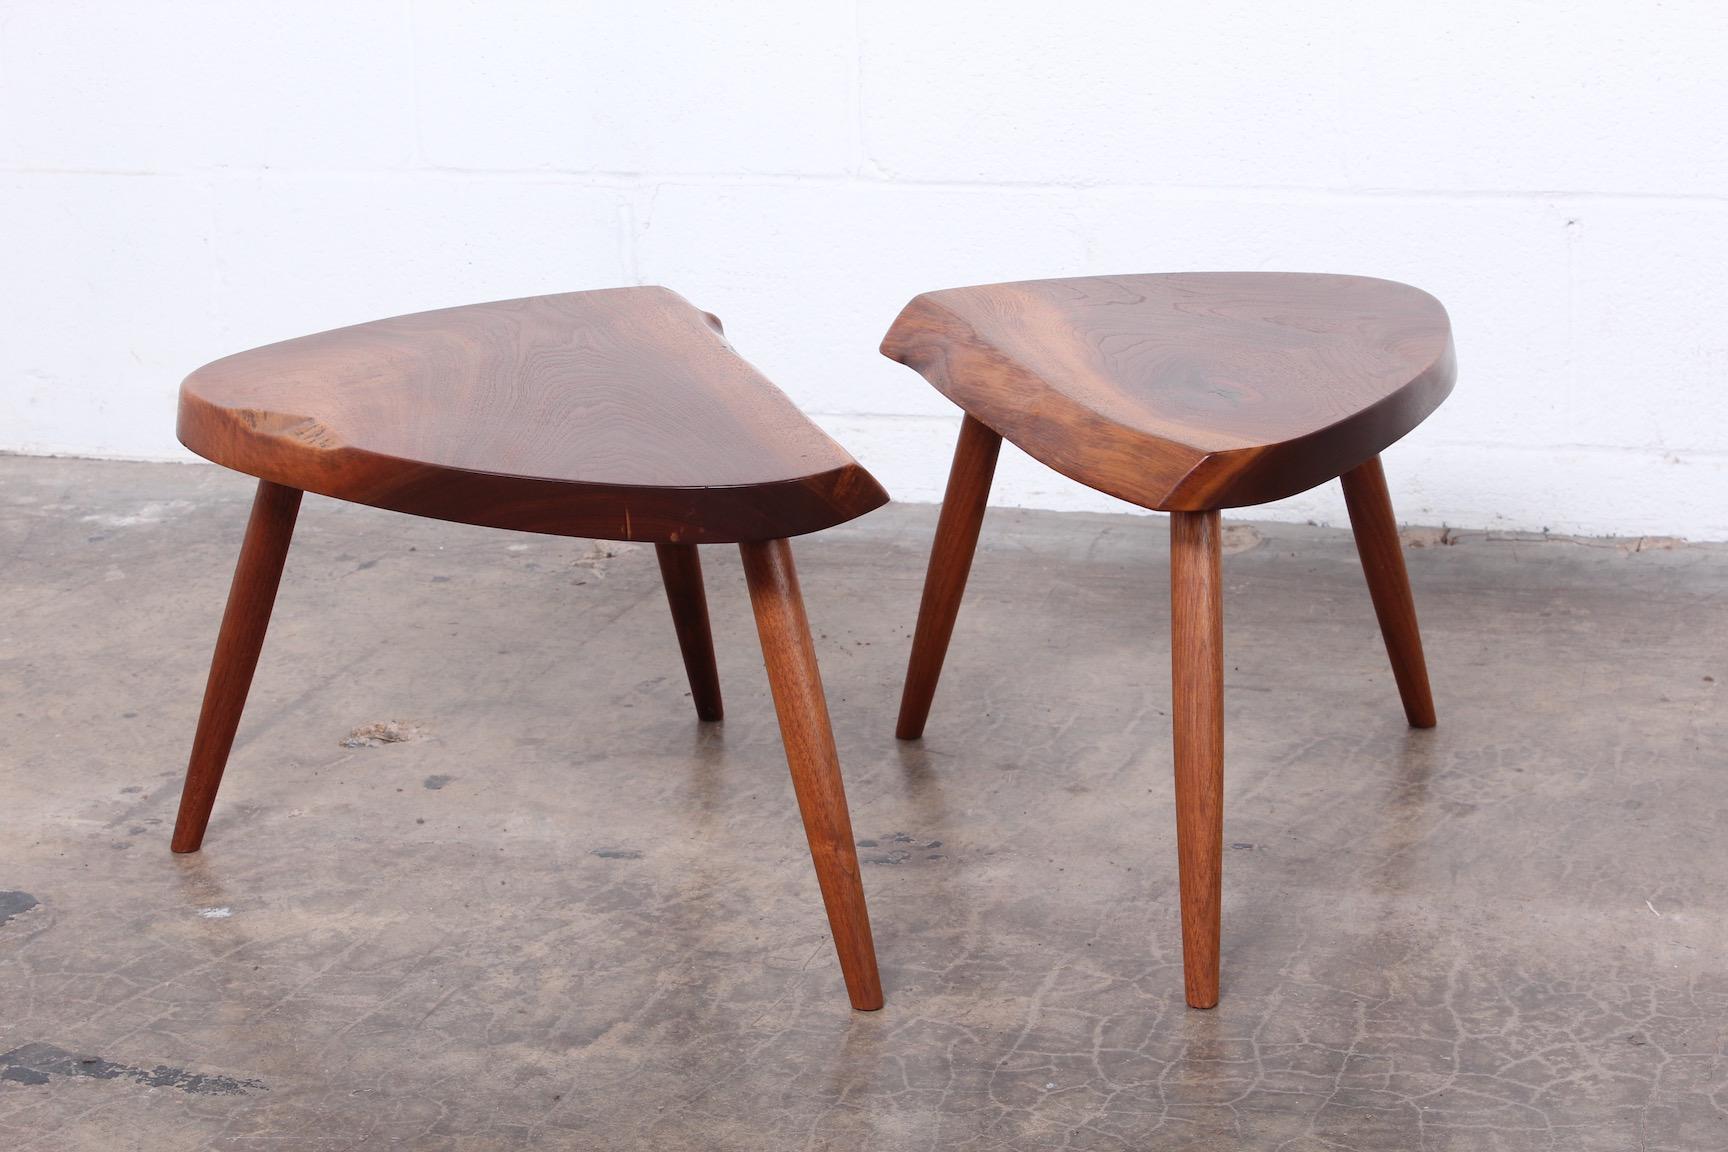 A pair of free edge, sap grain walnut tables / stools by George Nakashima, 1989.
  